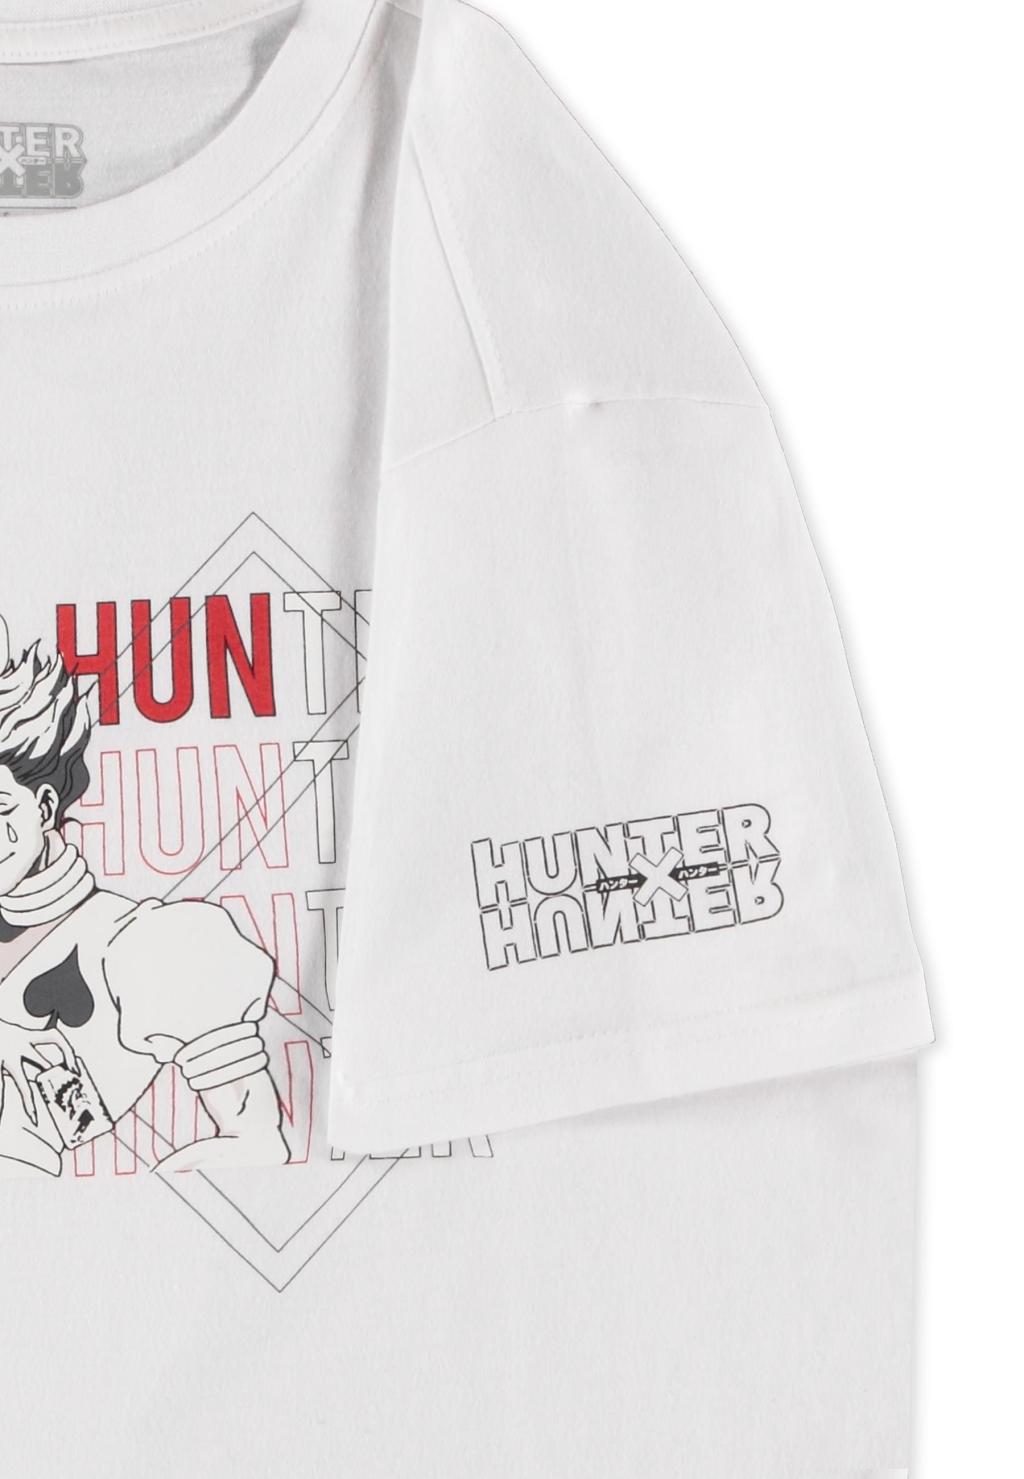 HUNTER X HUNTER - Hisoka - Women's T-shirt (XXL)